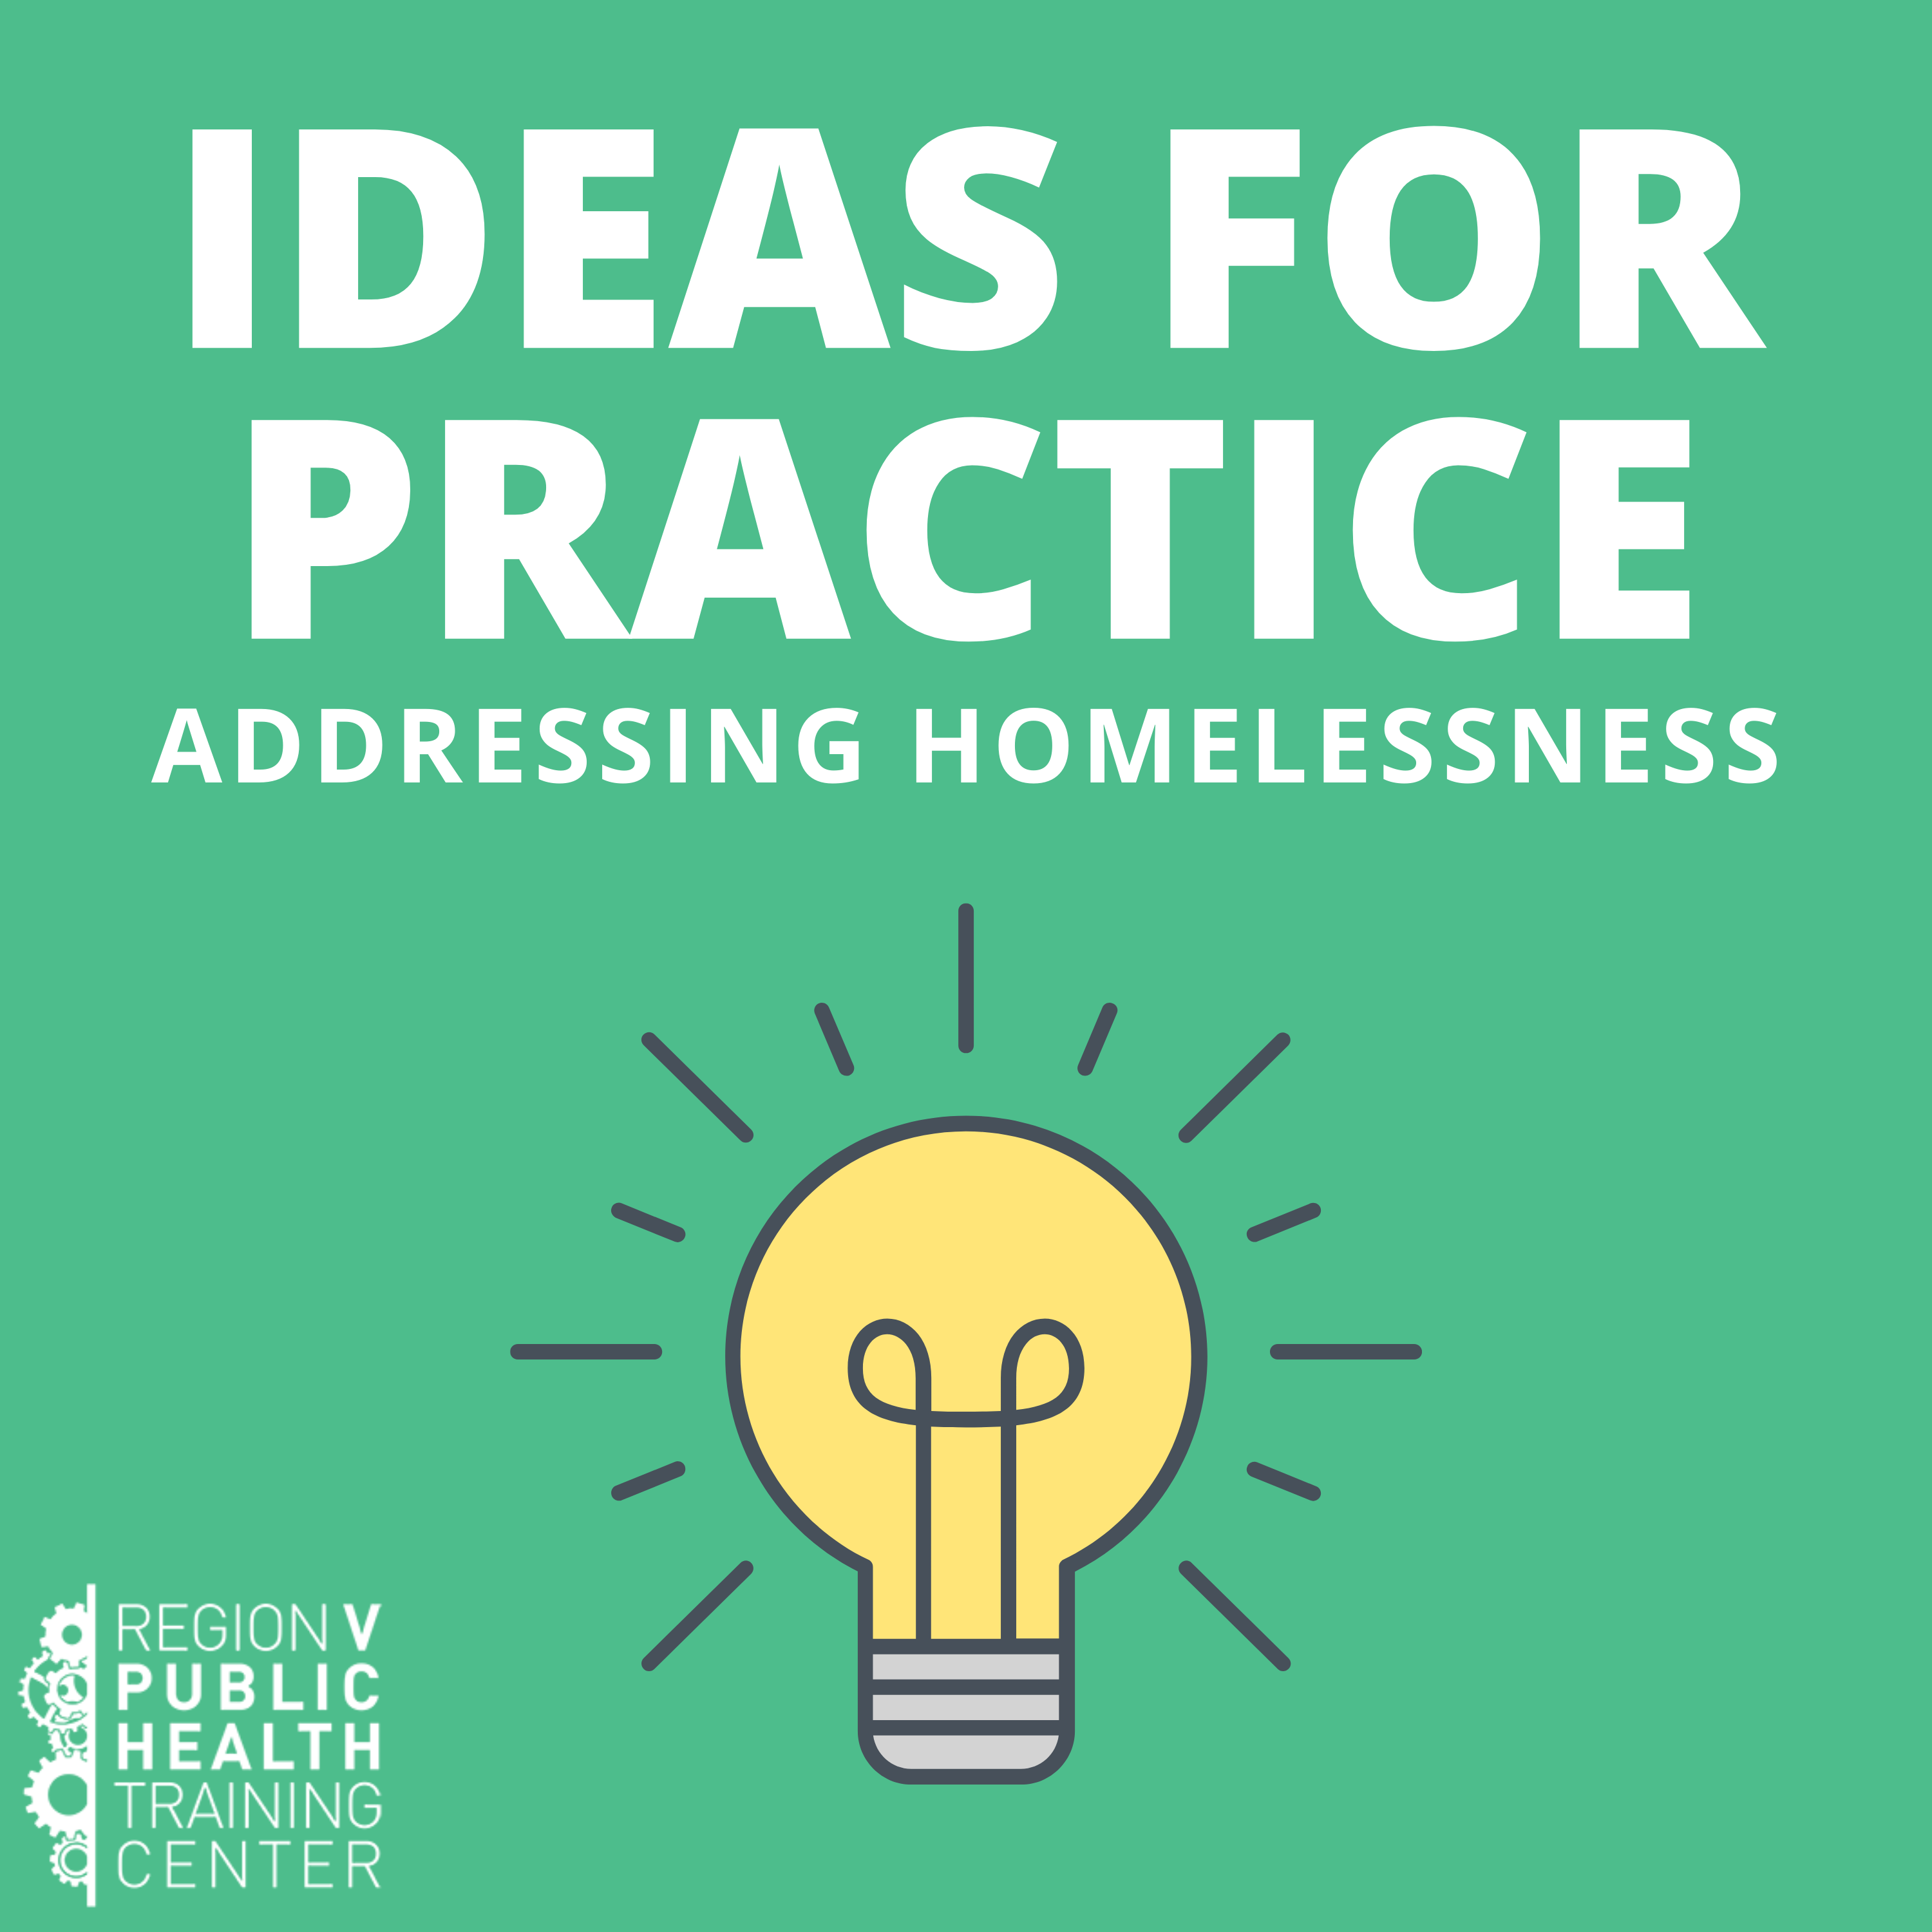 IDEAS FOR PRACTICE ADDRESSING HOMELESSNESS REGION V PUBLIC HEALTH TRAINING CENTER podcast logo with lightbulb icon in center